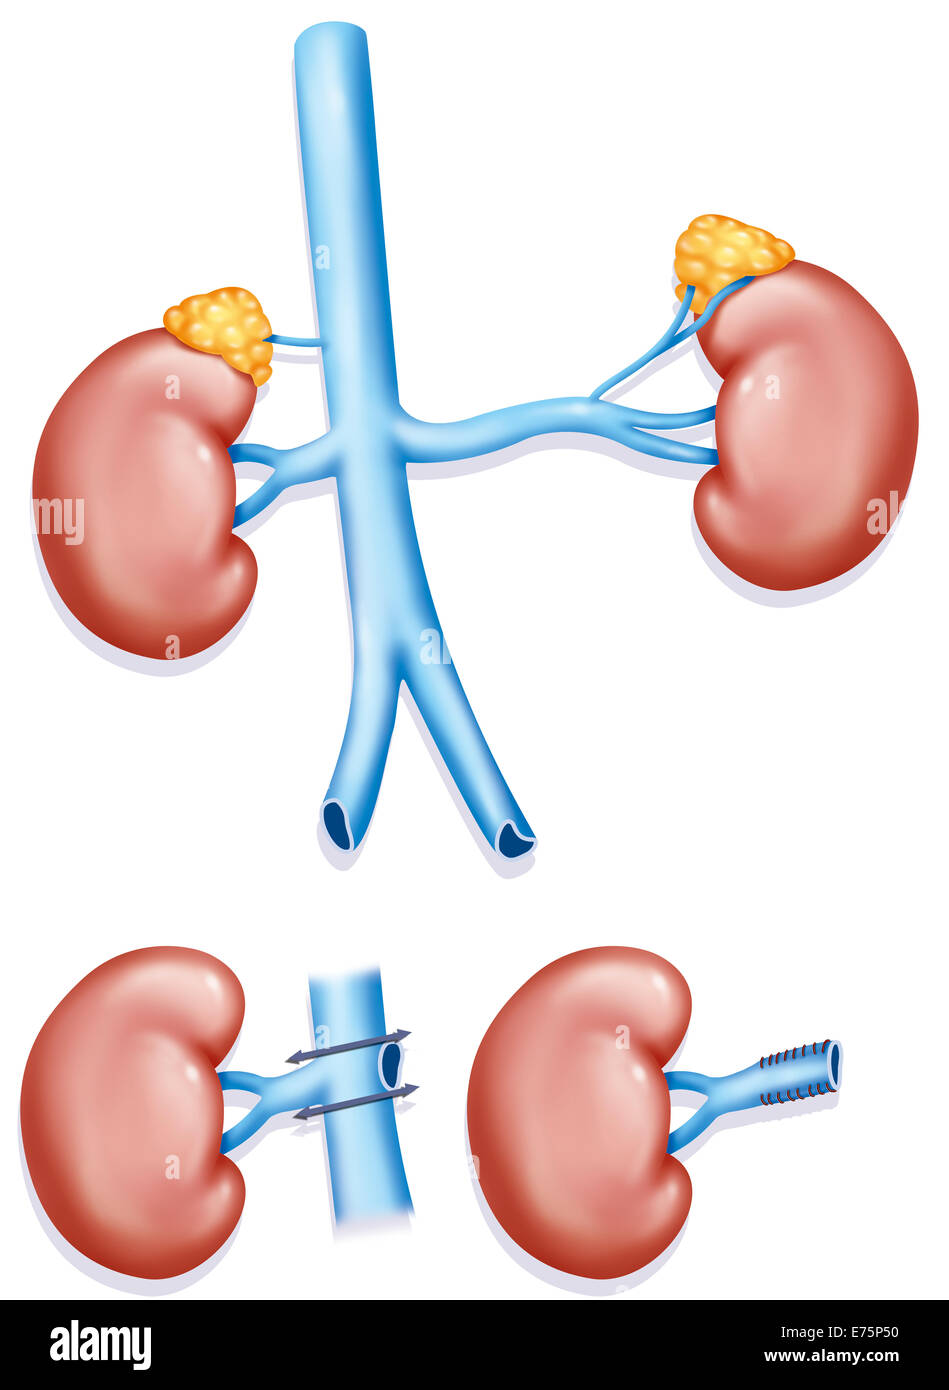 Transplant kidney, illustration Stock Photo